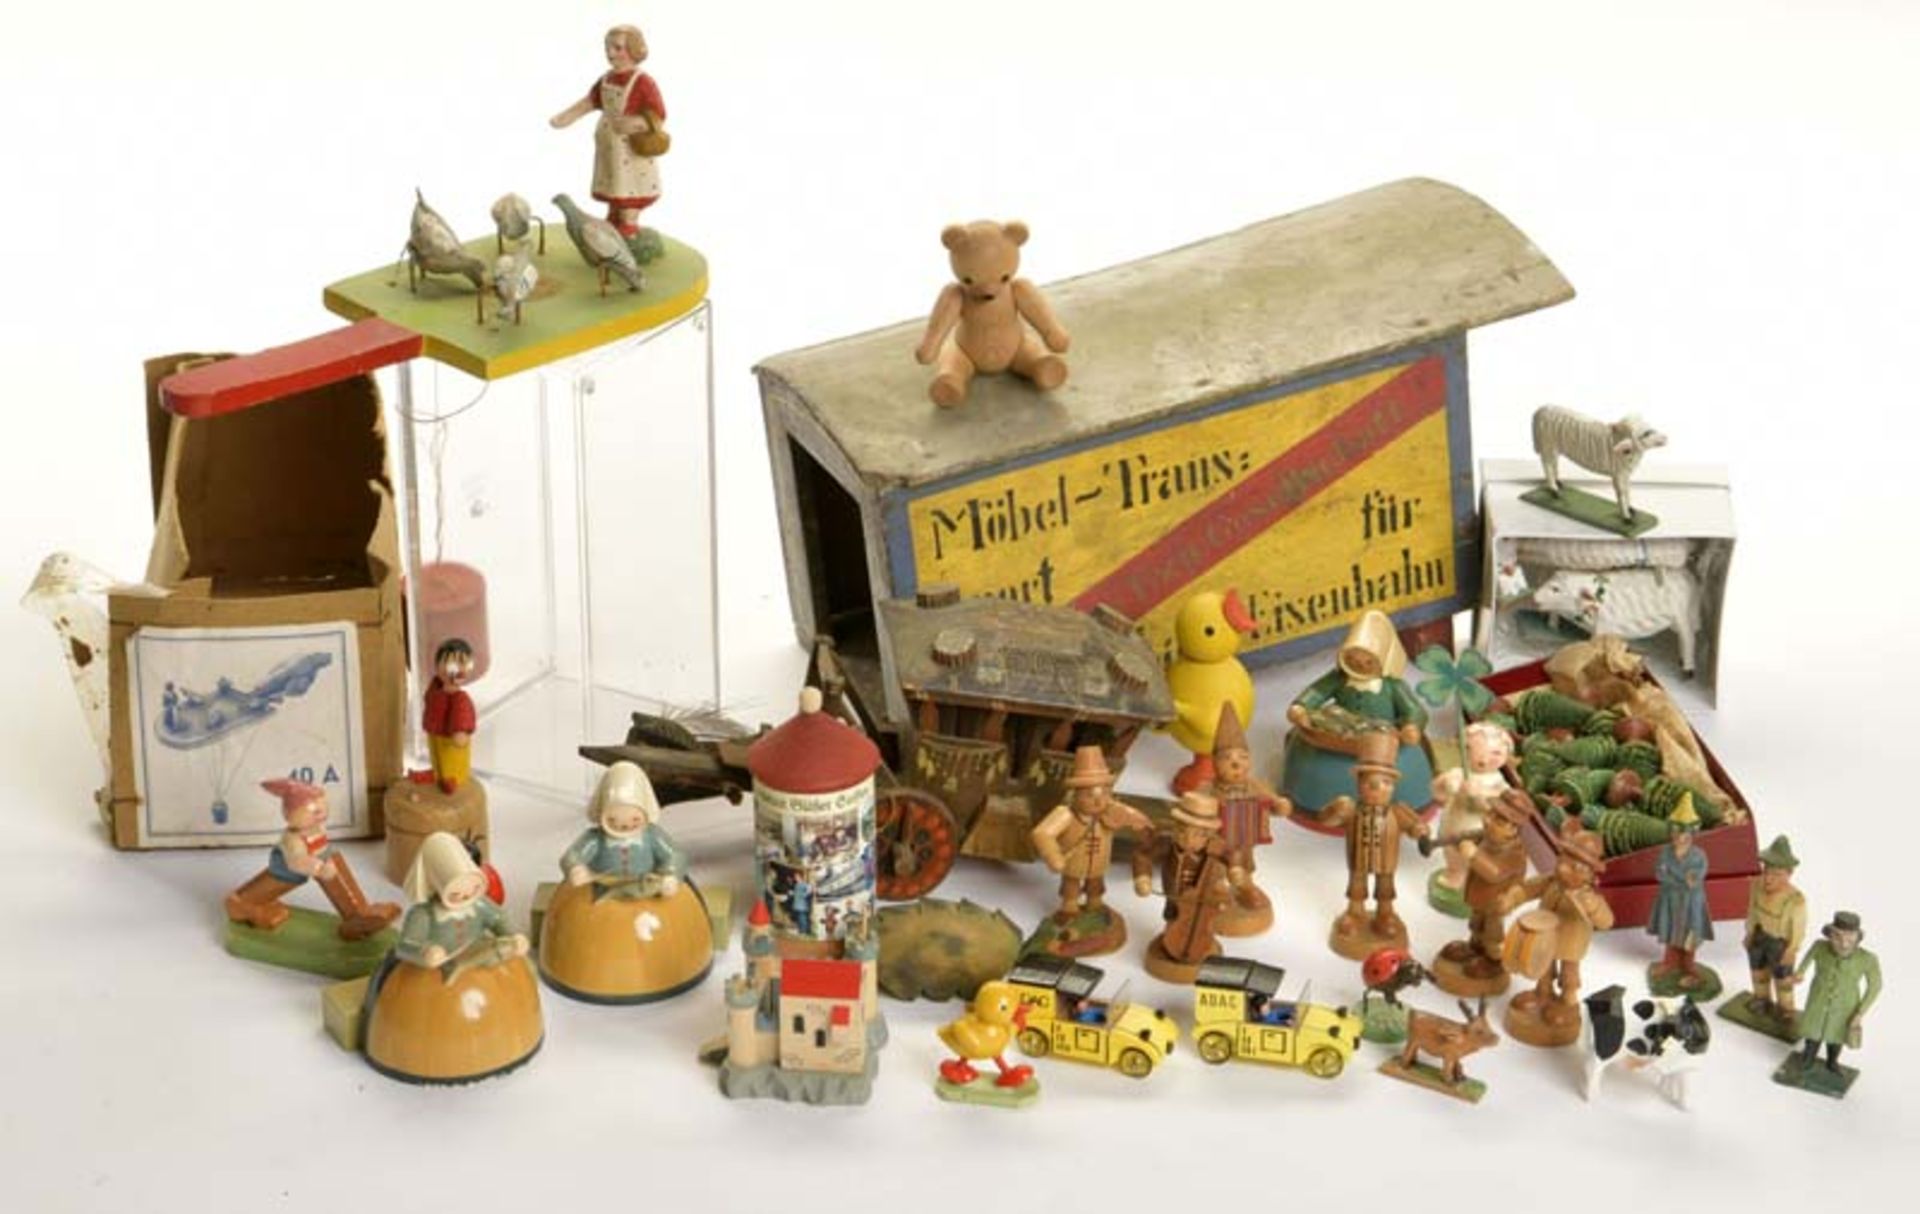 Erzgebirge + Marolin, Figures, Miniatures a.o., Germany, out of wood, trasure trove, please